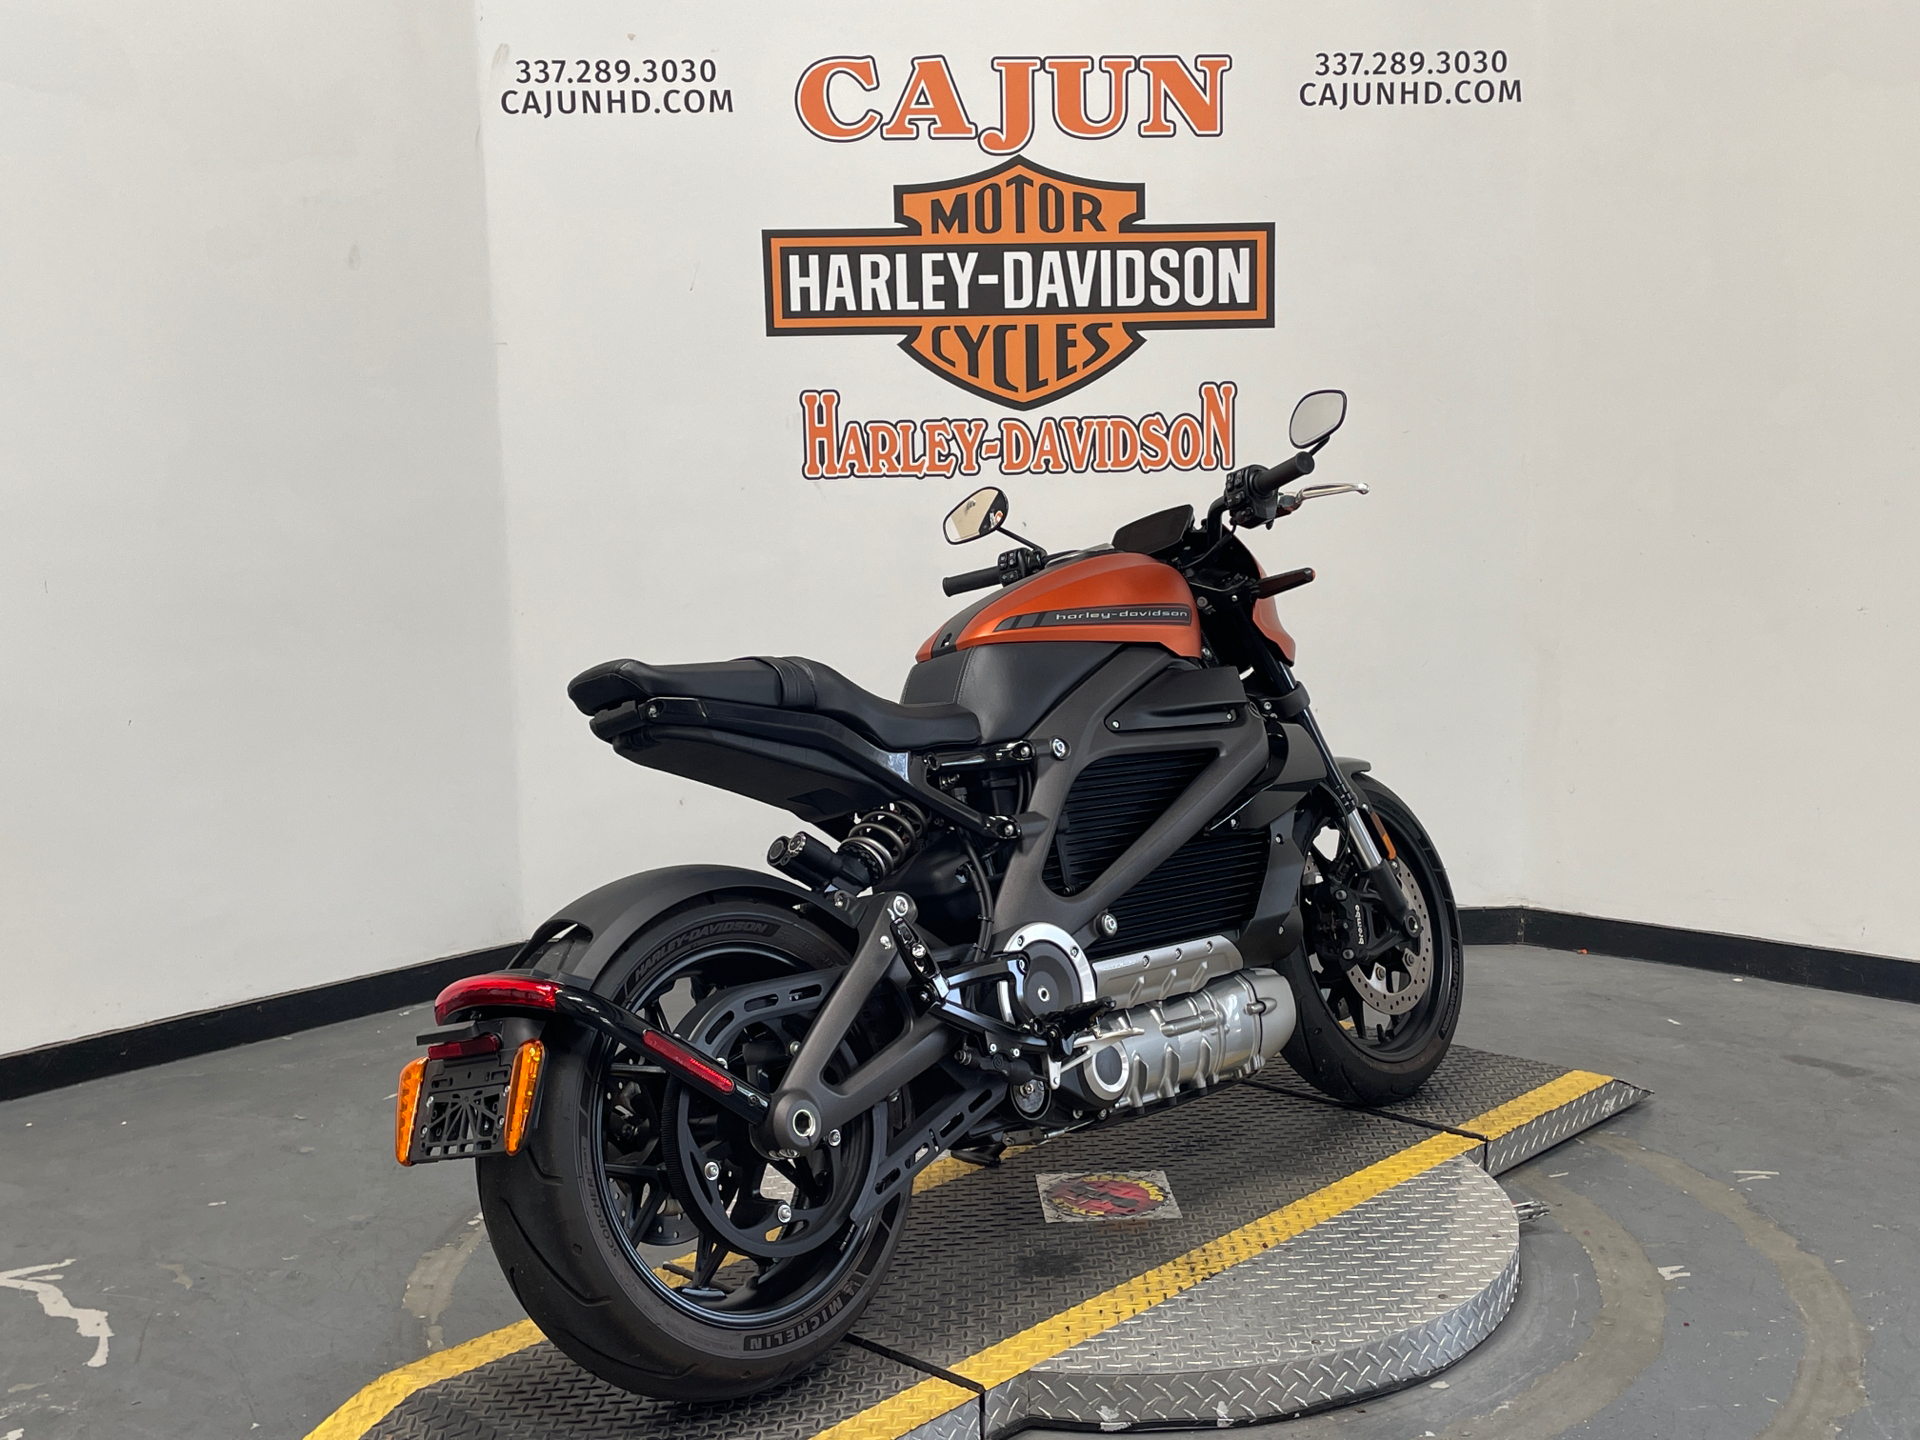 2020 Harley-Davidson Livewire™ in Scott, Louisiana - Photo 7